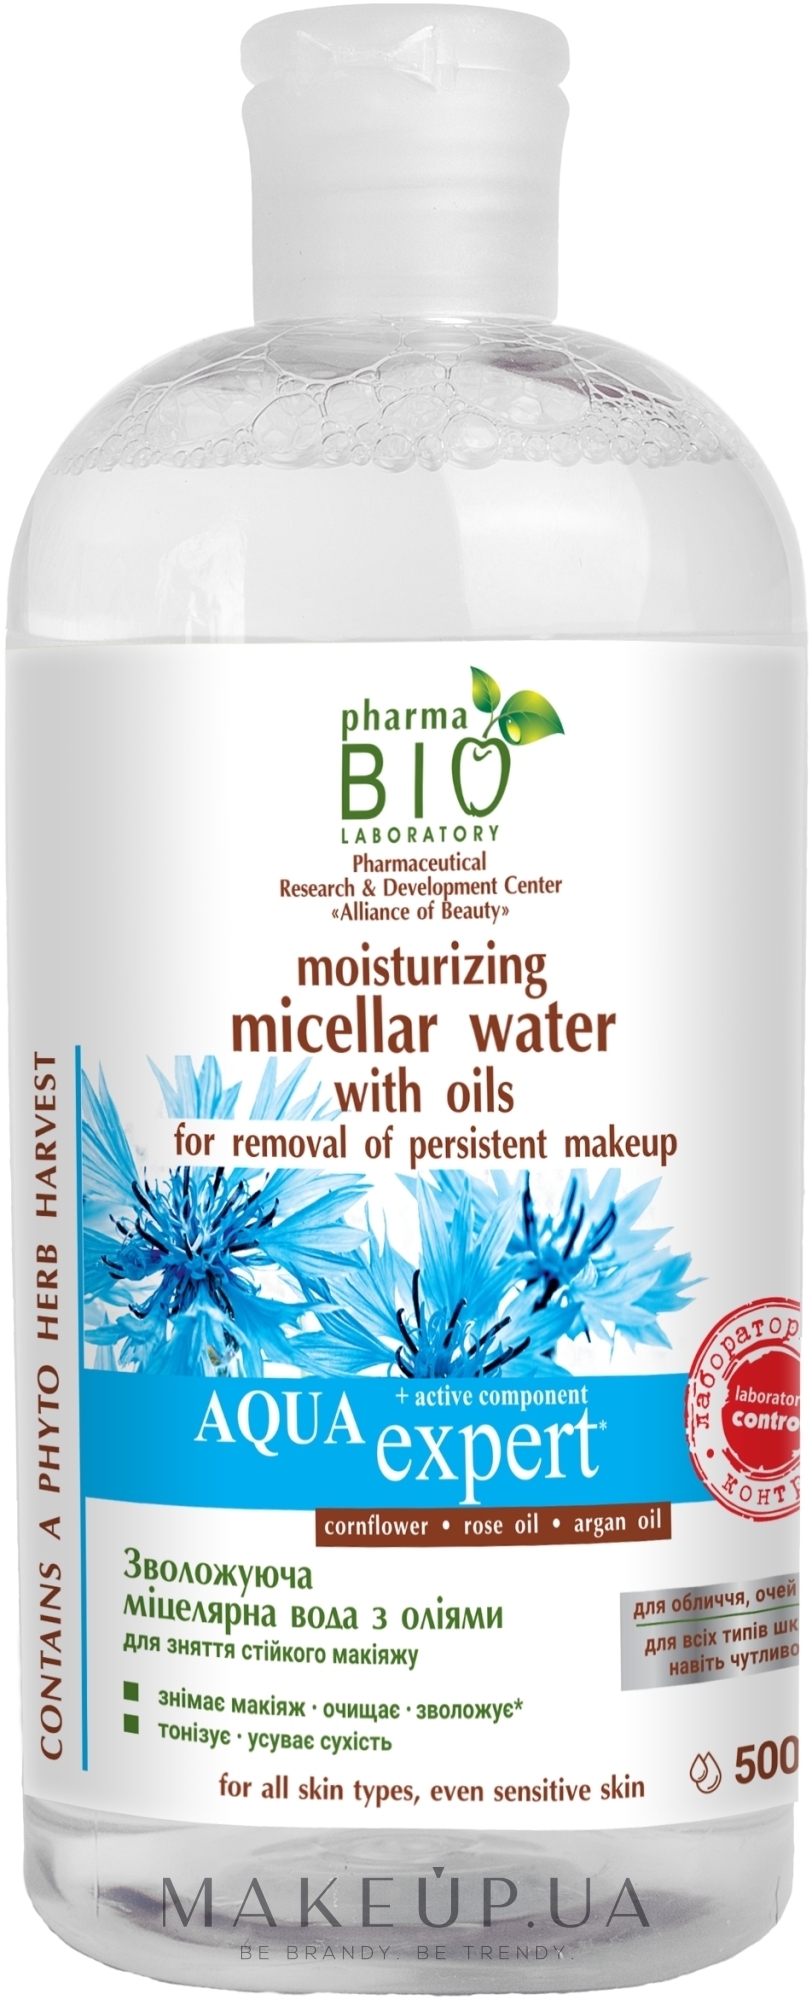 Мицеллярная вода Bioderma: отзывы | Beauty Insider